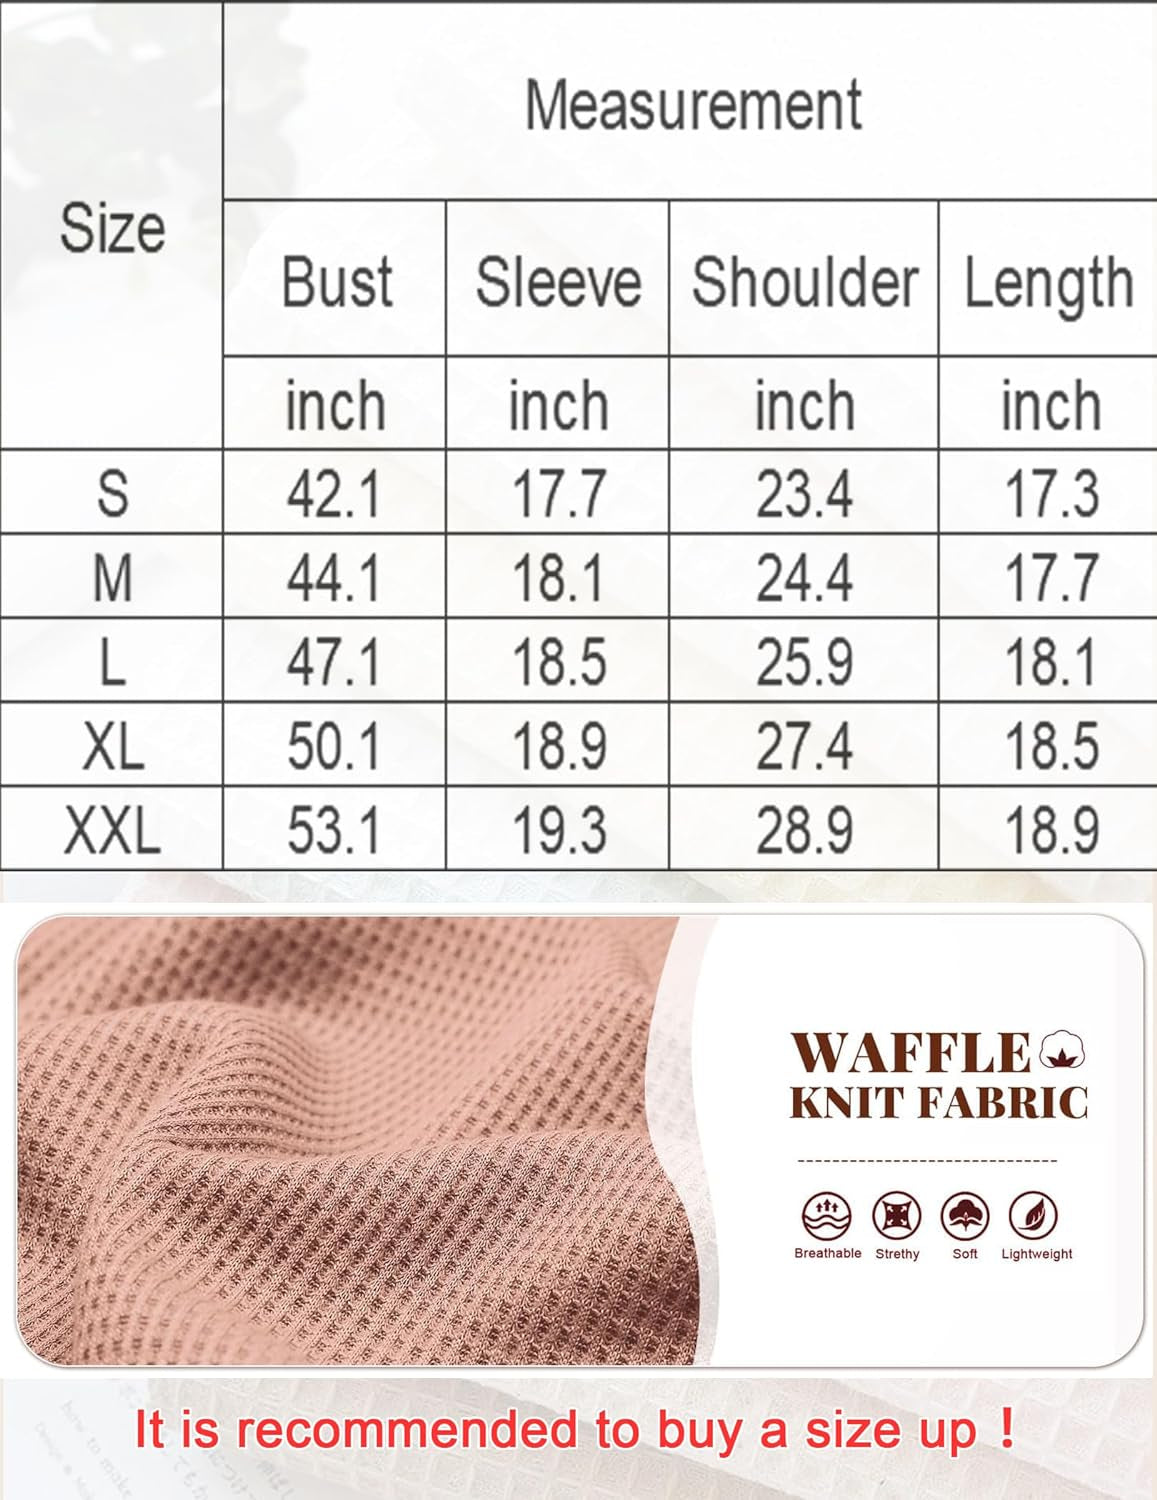 Women Long Sleeve Tops Waffle Knit Shirts Fashion Cropped Top Casual V Neck T Shirts